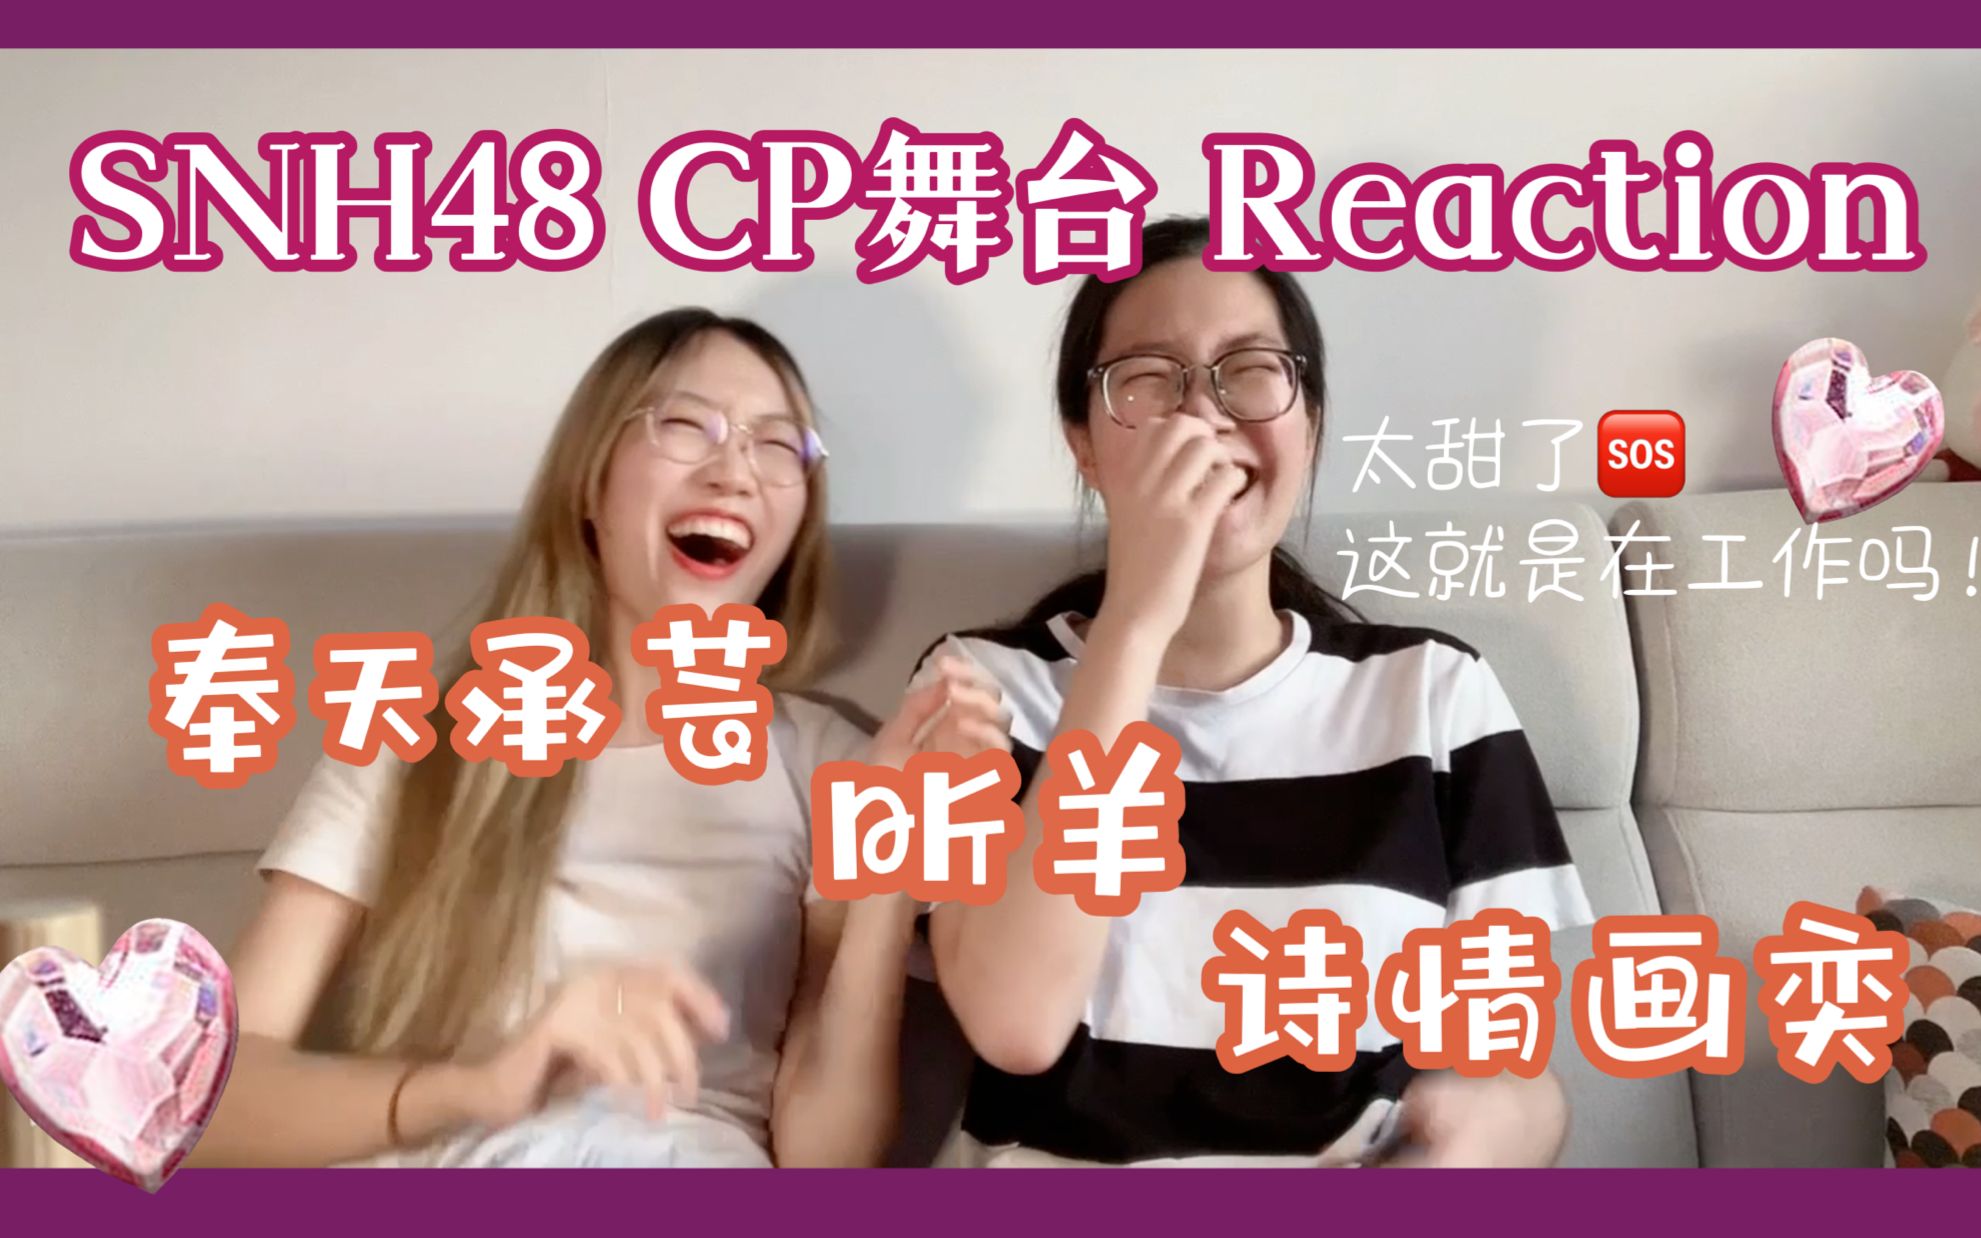 【SNH48 Reaction】当侄女路人粉看河内CP舞台 | 救命这就是在工作吗？